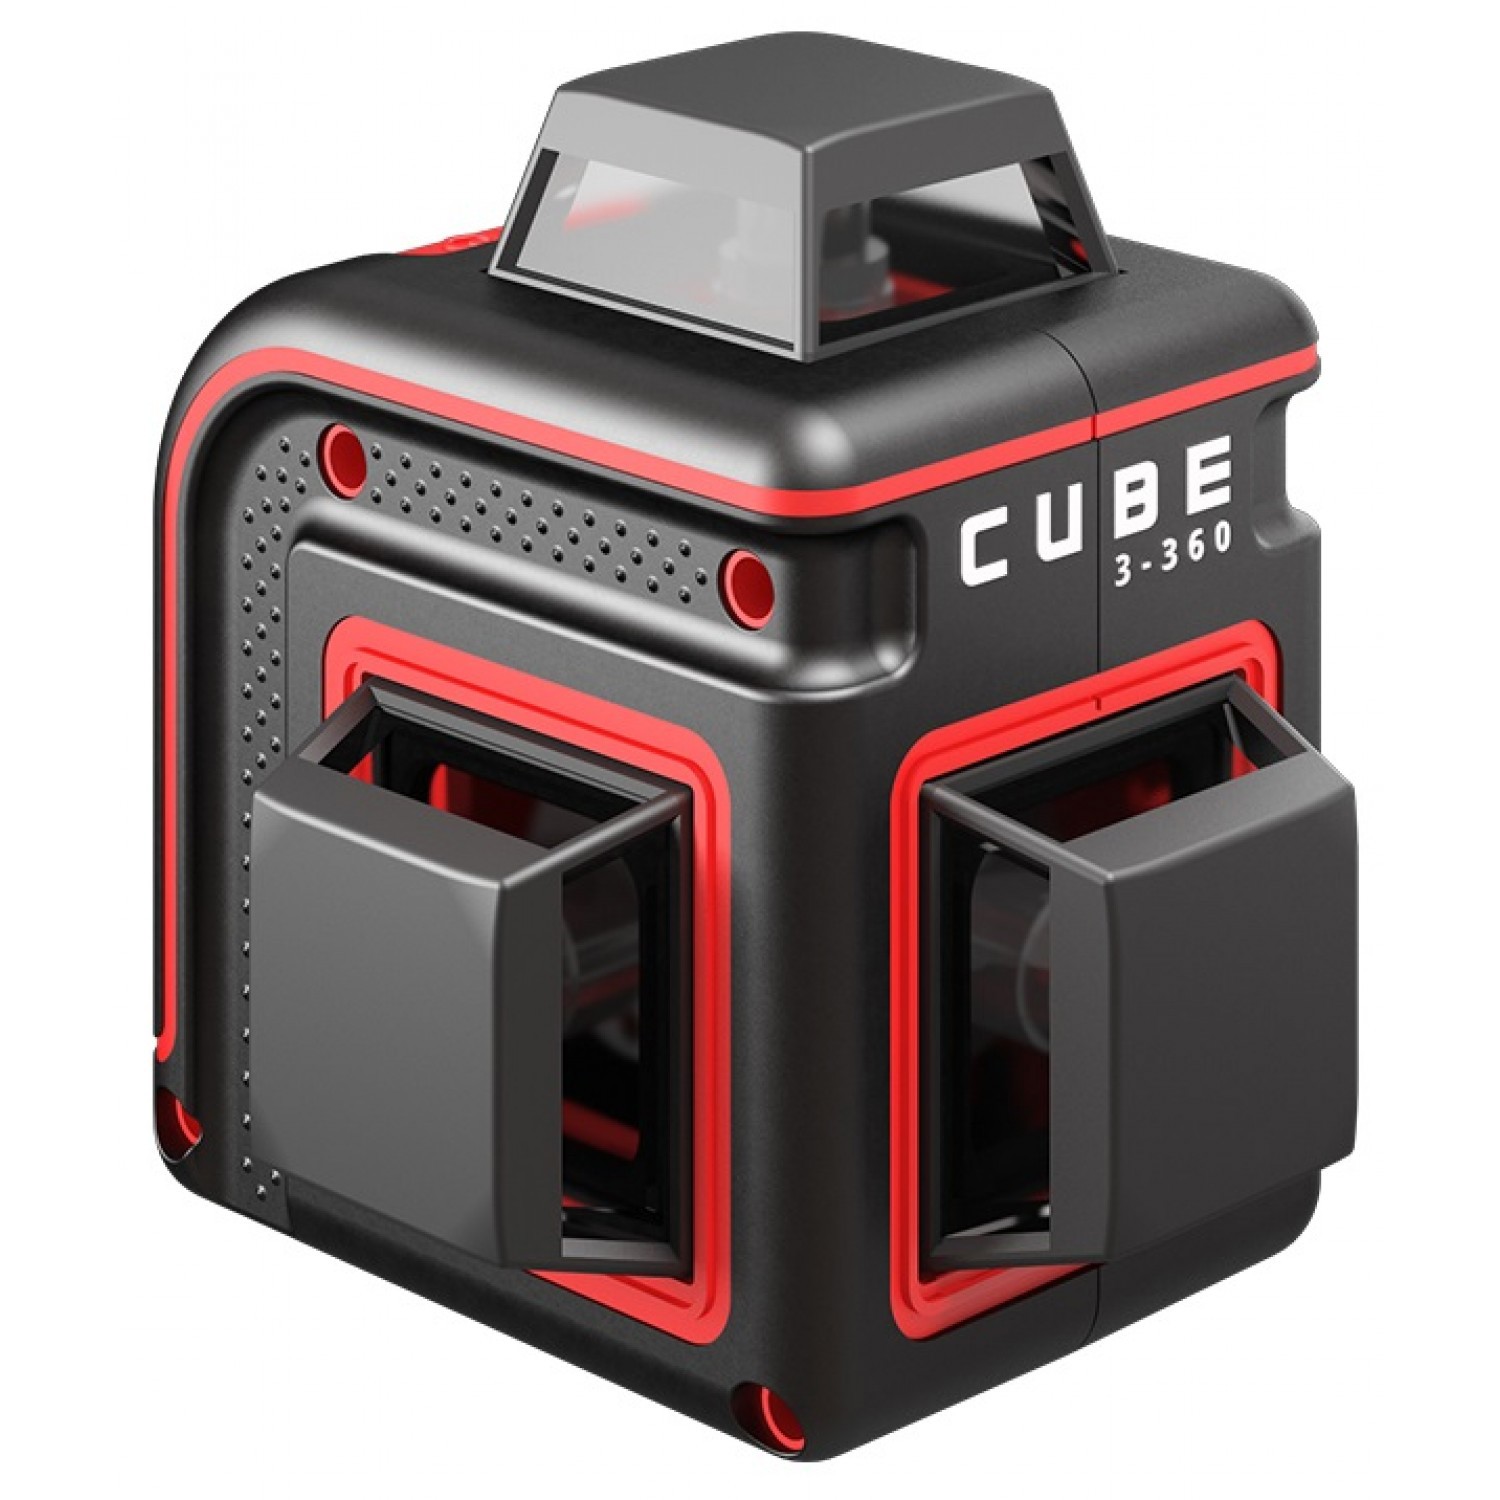 Cube 360 ultimate edition. Лазерный уровень ada Cube 3-360 Home Edition а00565. Нивелир лазерный ada Cube 360 professional Edition. Лазерный уровень ada Cube 360 Basic Edition. Лазерный уровень ada Cube 3-360 Green Basic Edition.